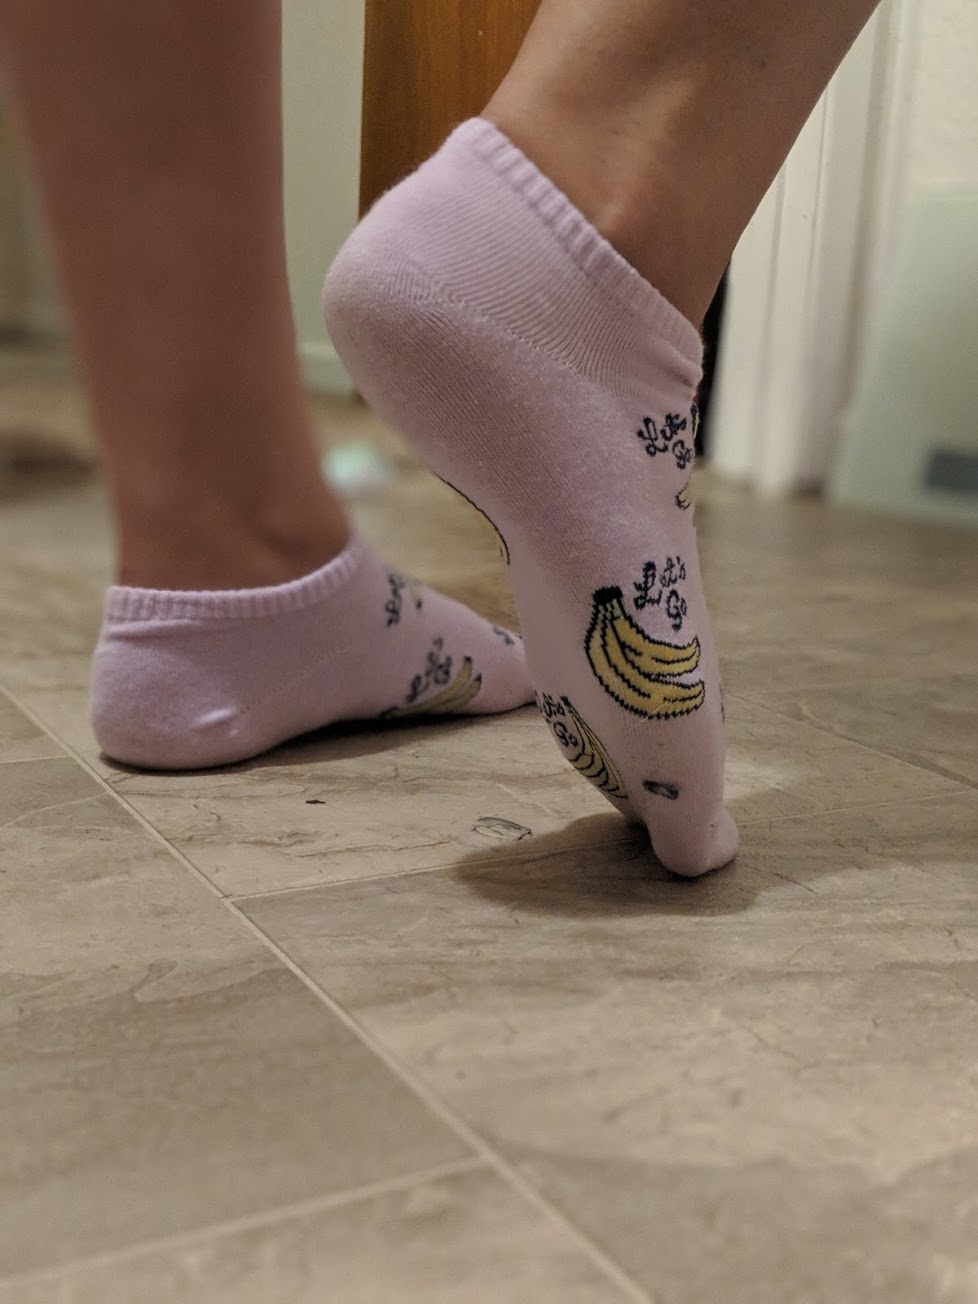 WORN banana socks